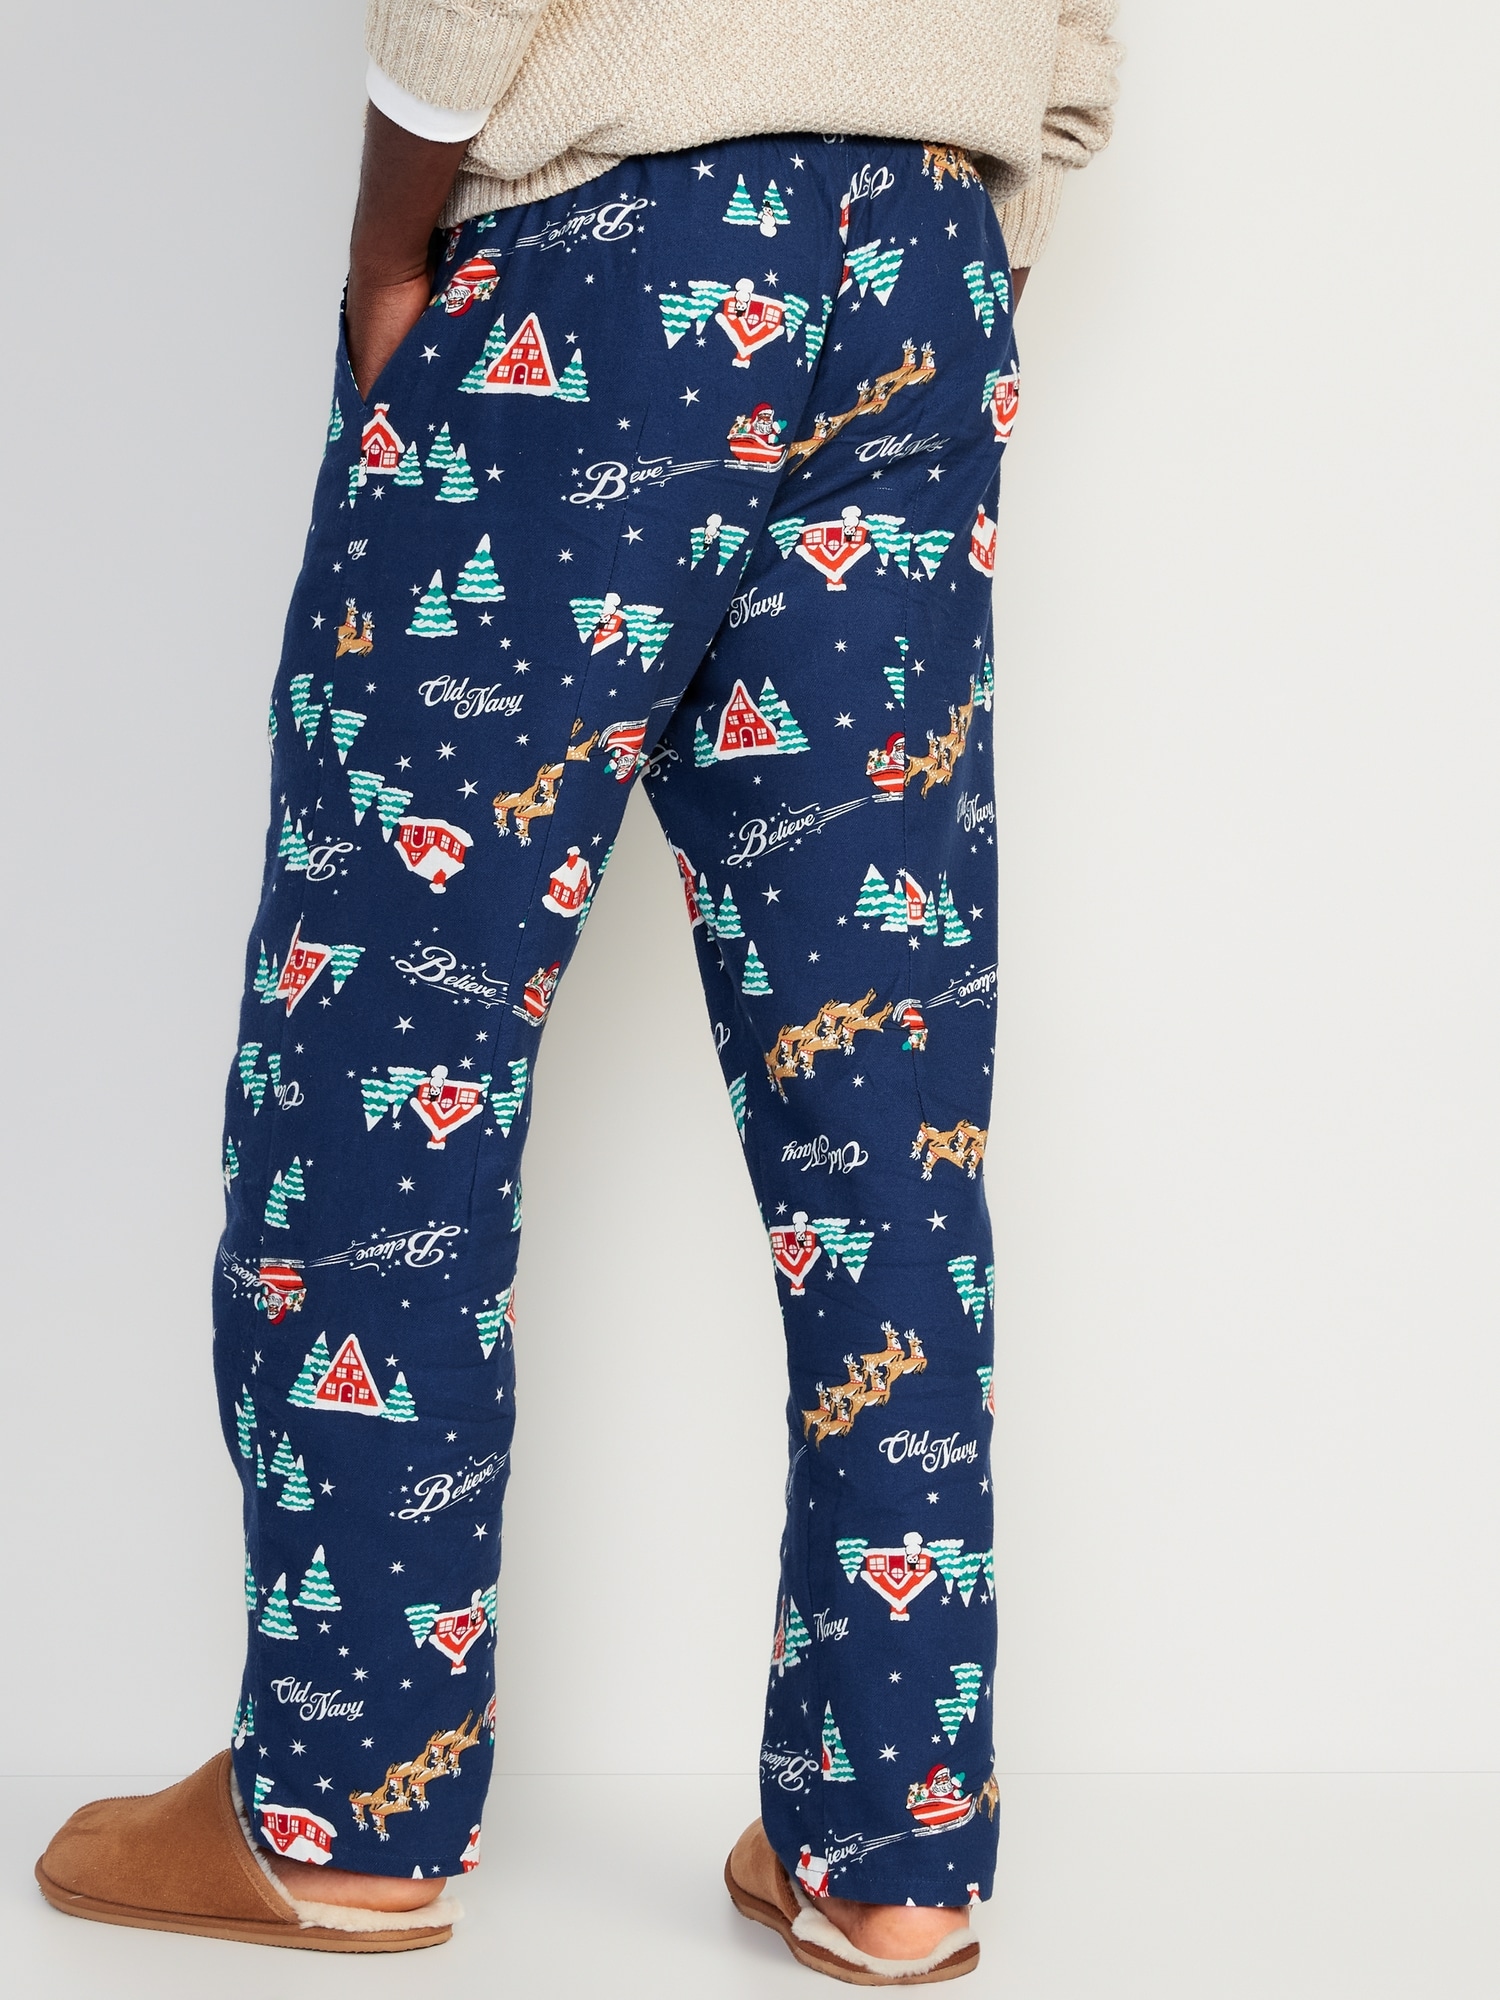 Buy the Old Navy Polar Bear Pajama Pants